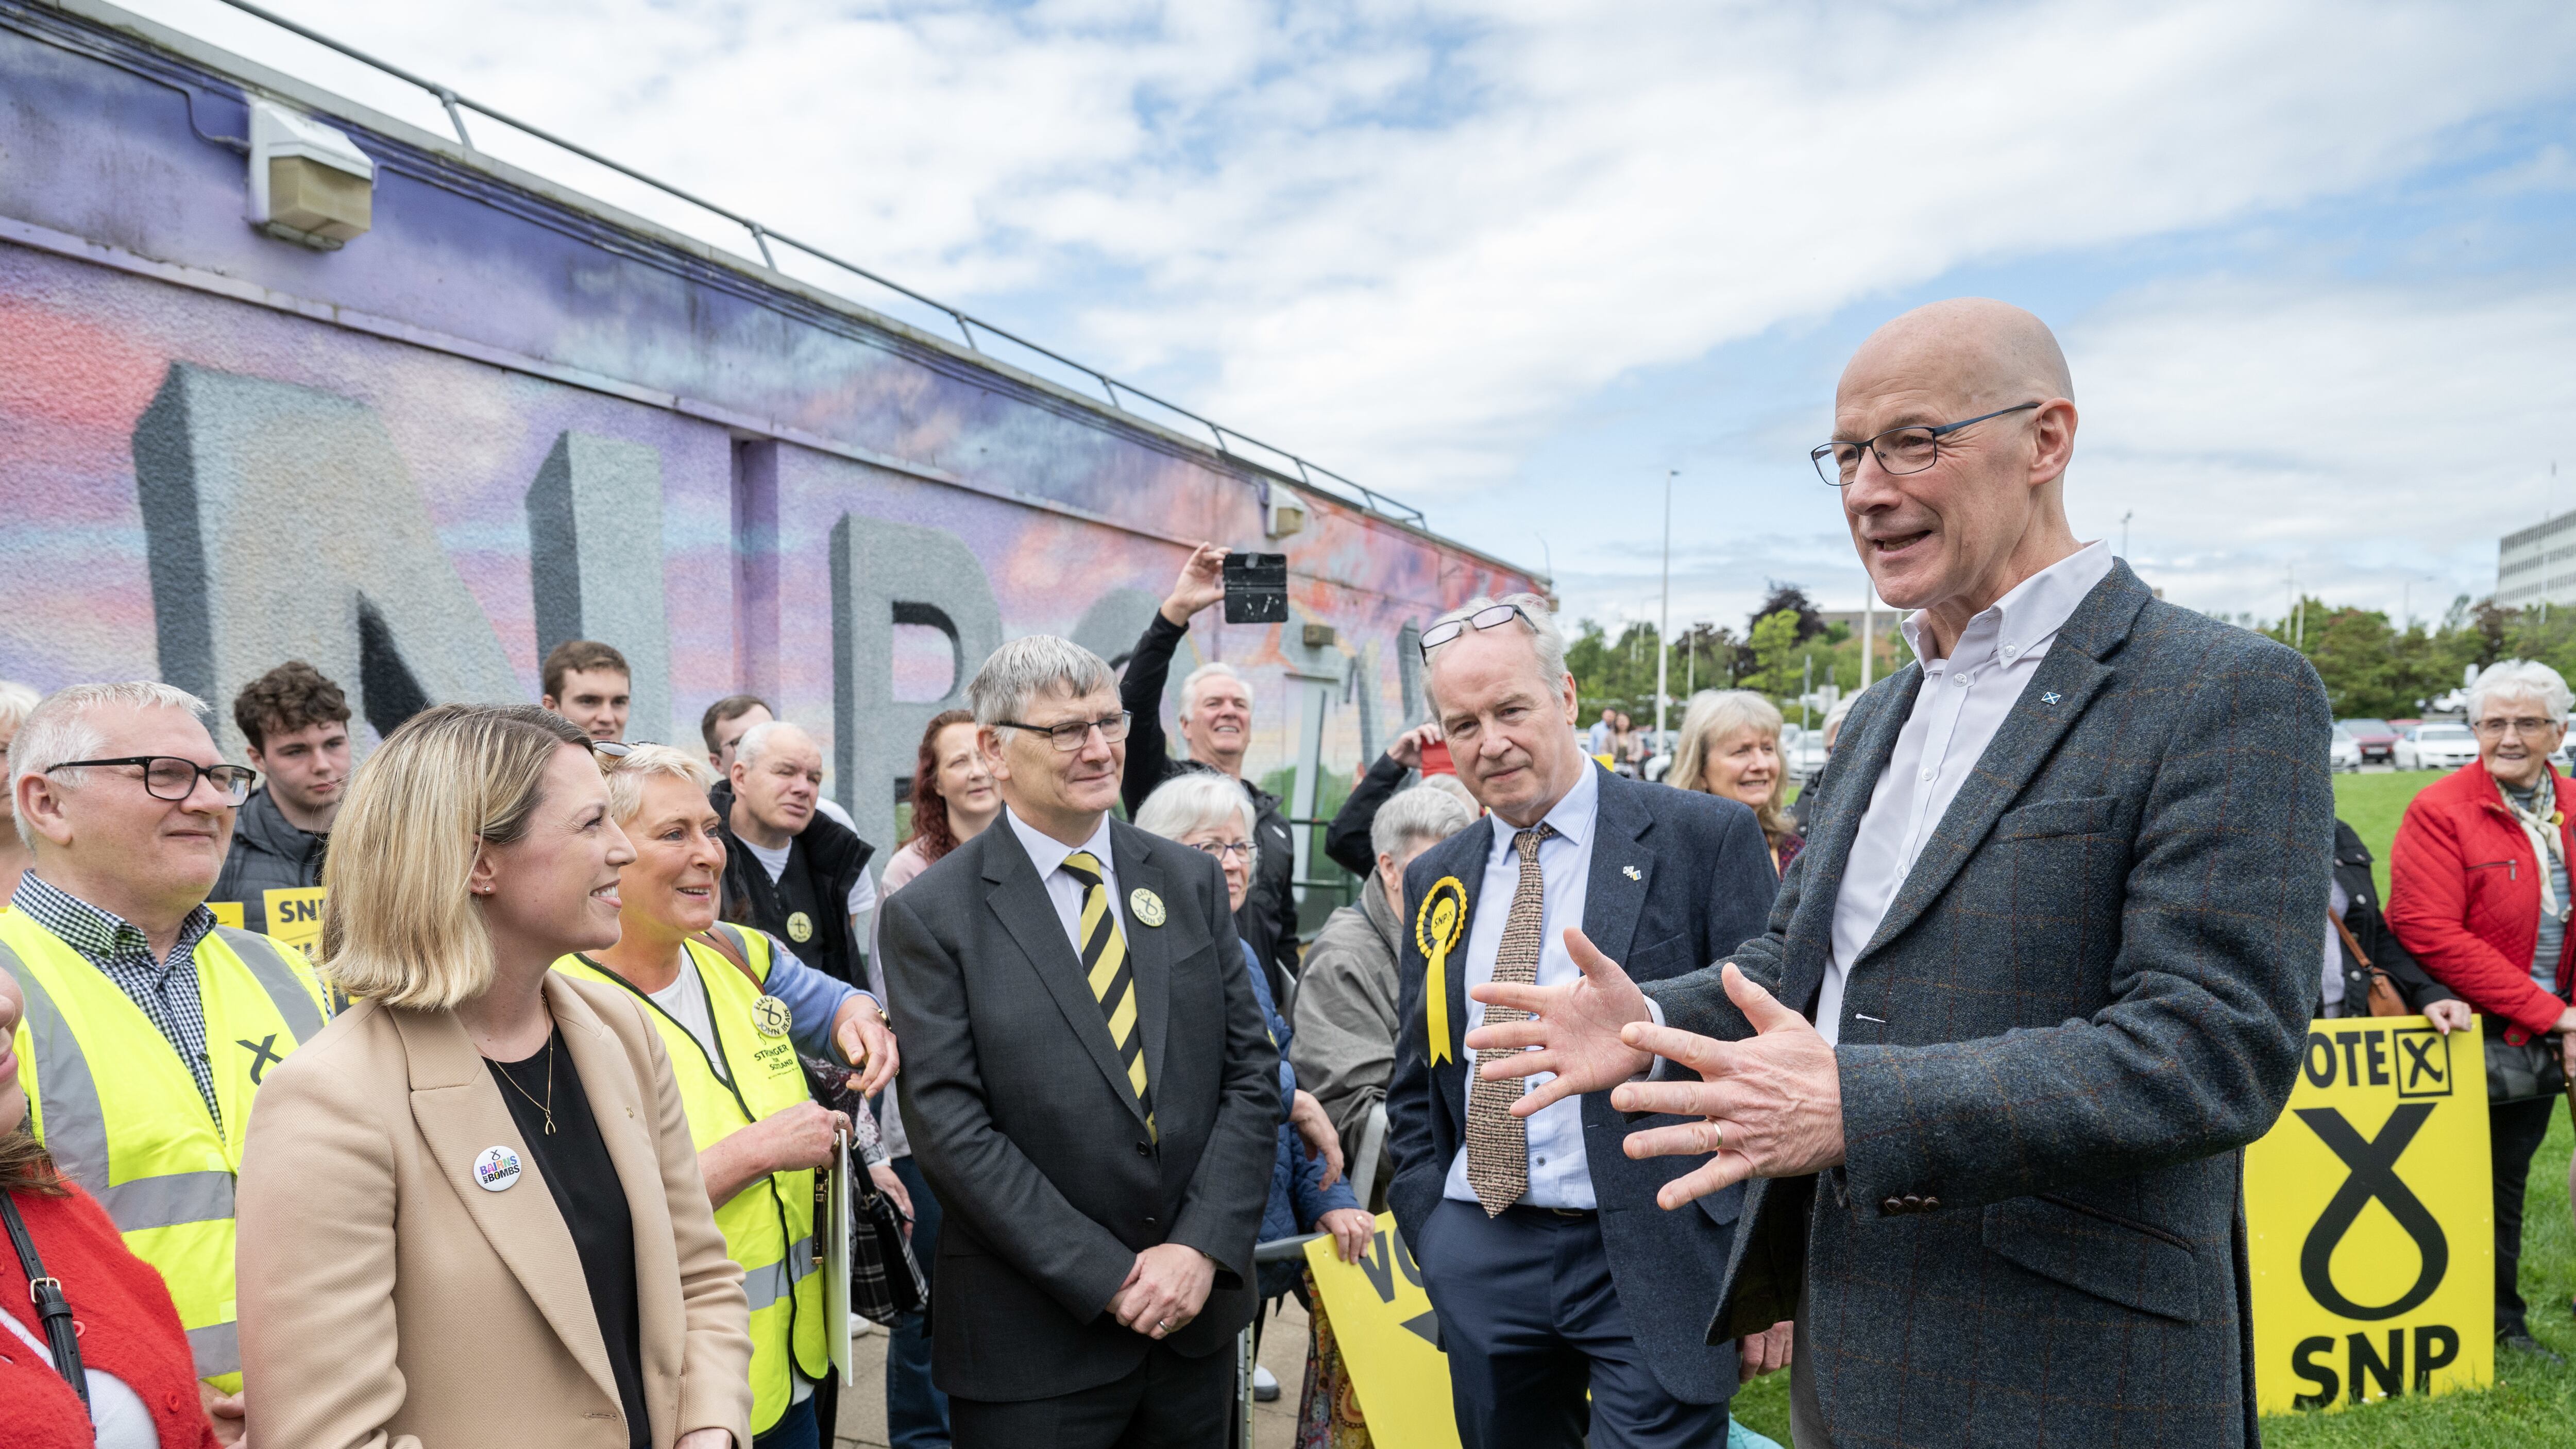 John Swinney visited several constituencies around Scotland on Saturday